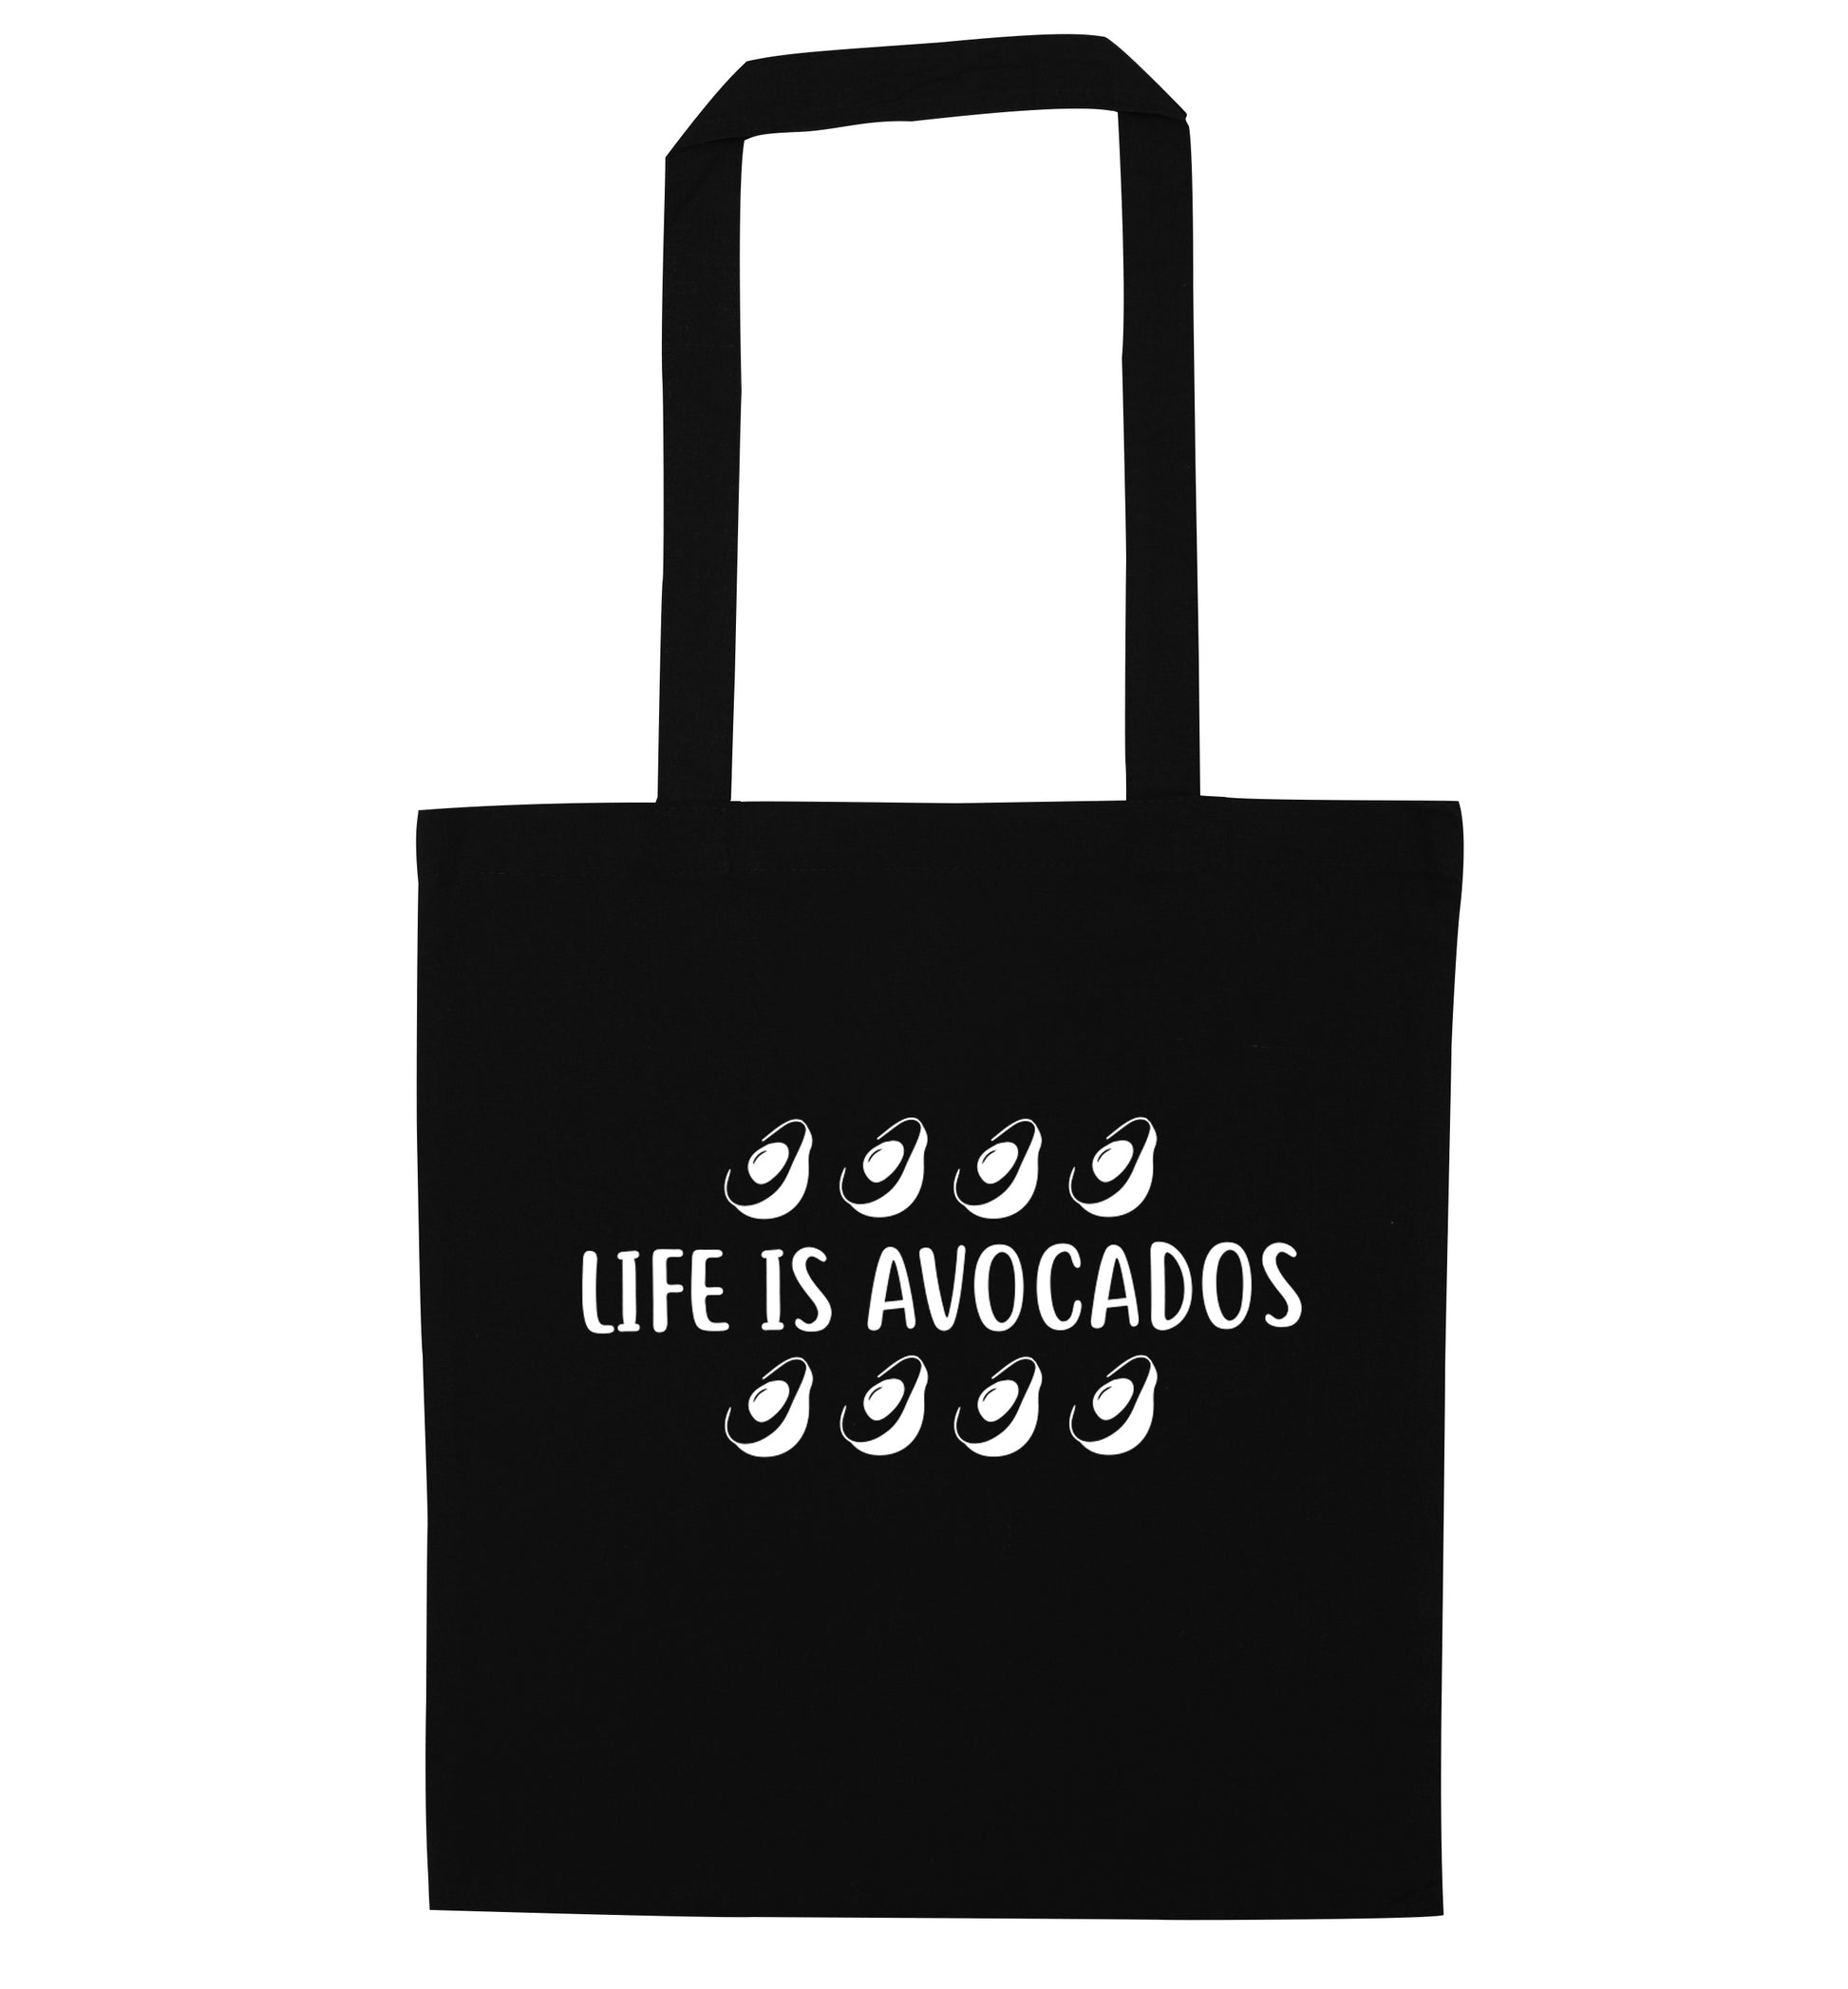 Life is avocados black tote bag